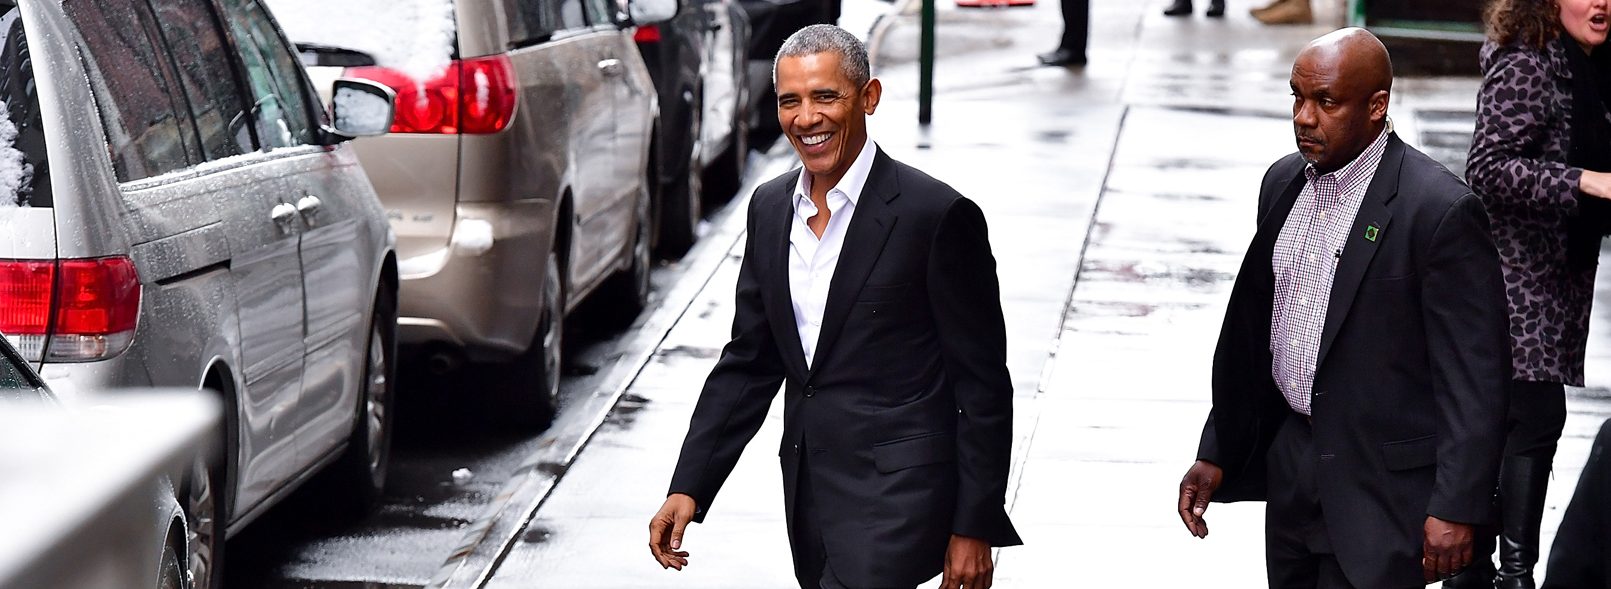 Barack Obama leaves Upland restaurant on March 10, 2017 in New York City.  (James Devaney/GC Images)